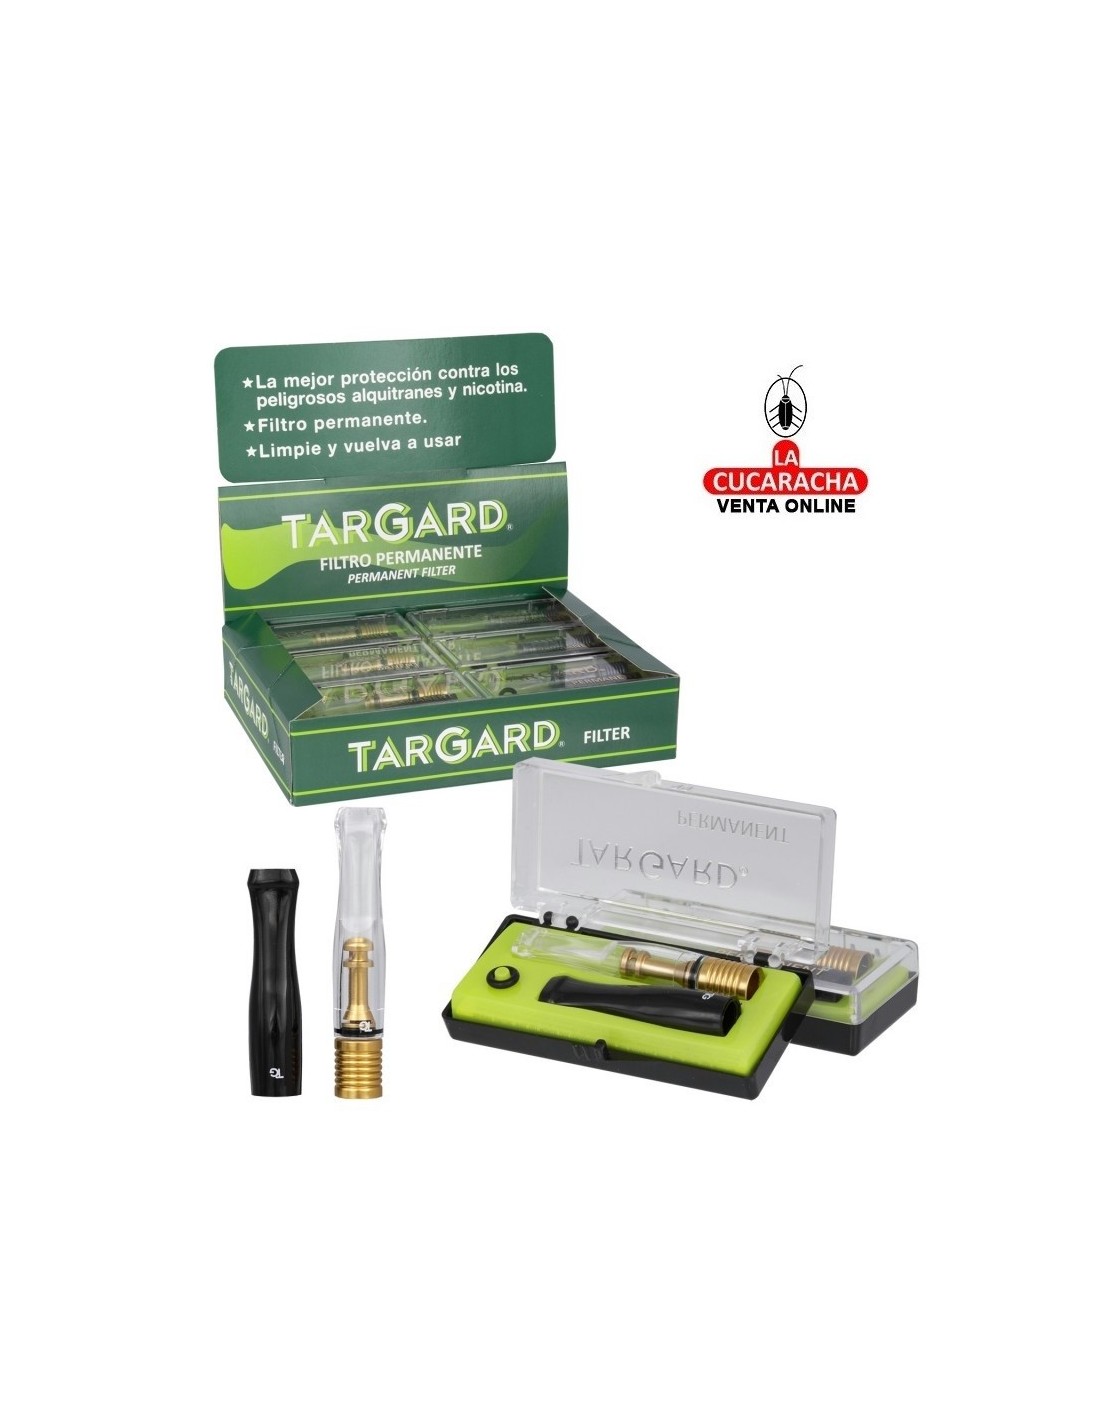 comprar targard-pack-12-boquilla-filtro-permanente-cigarrillo